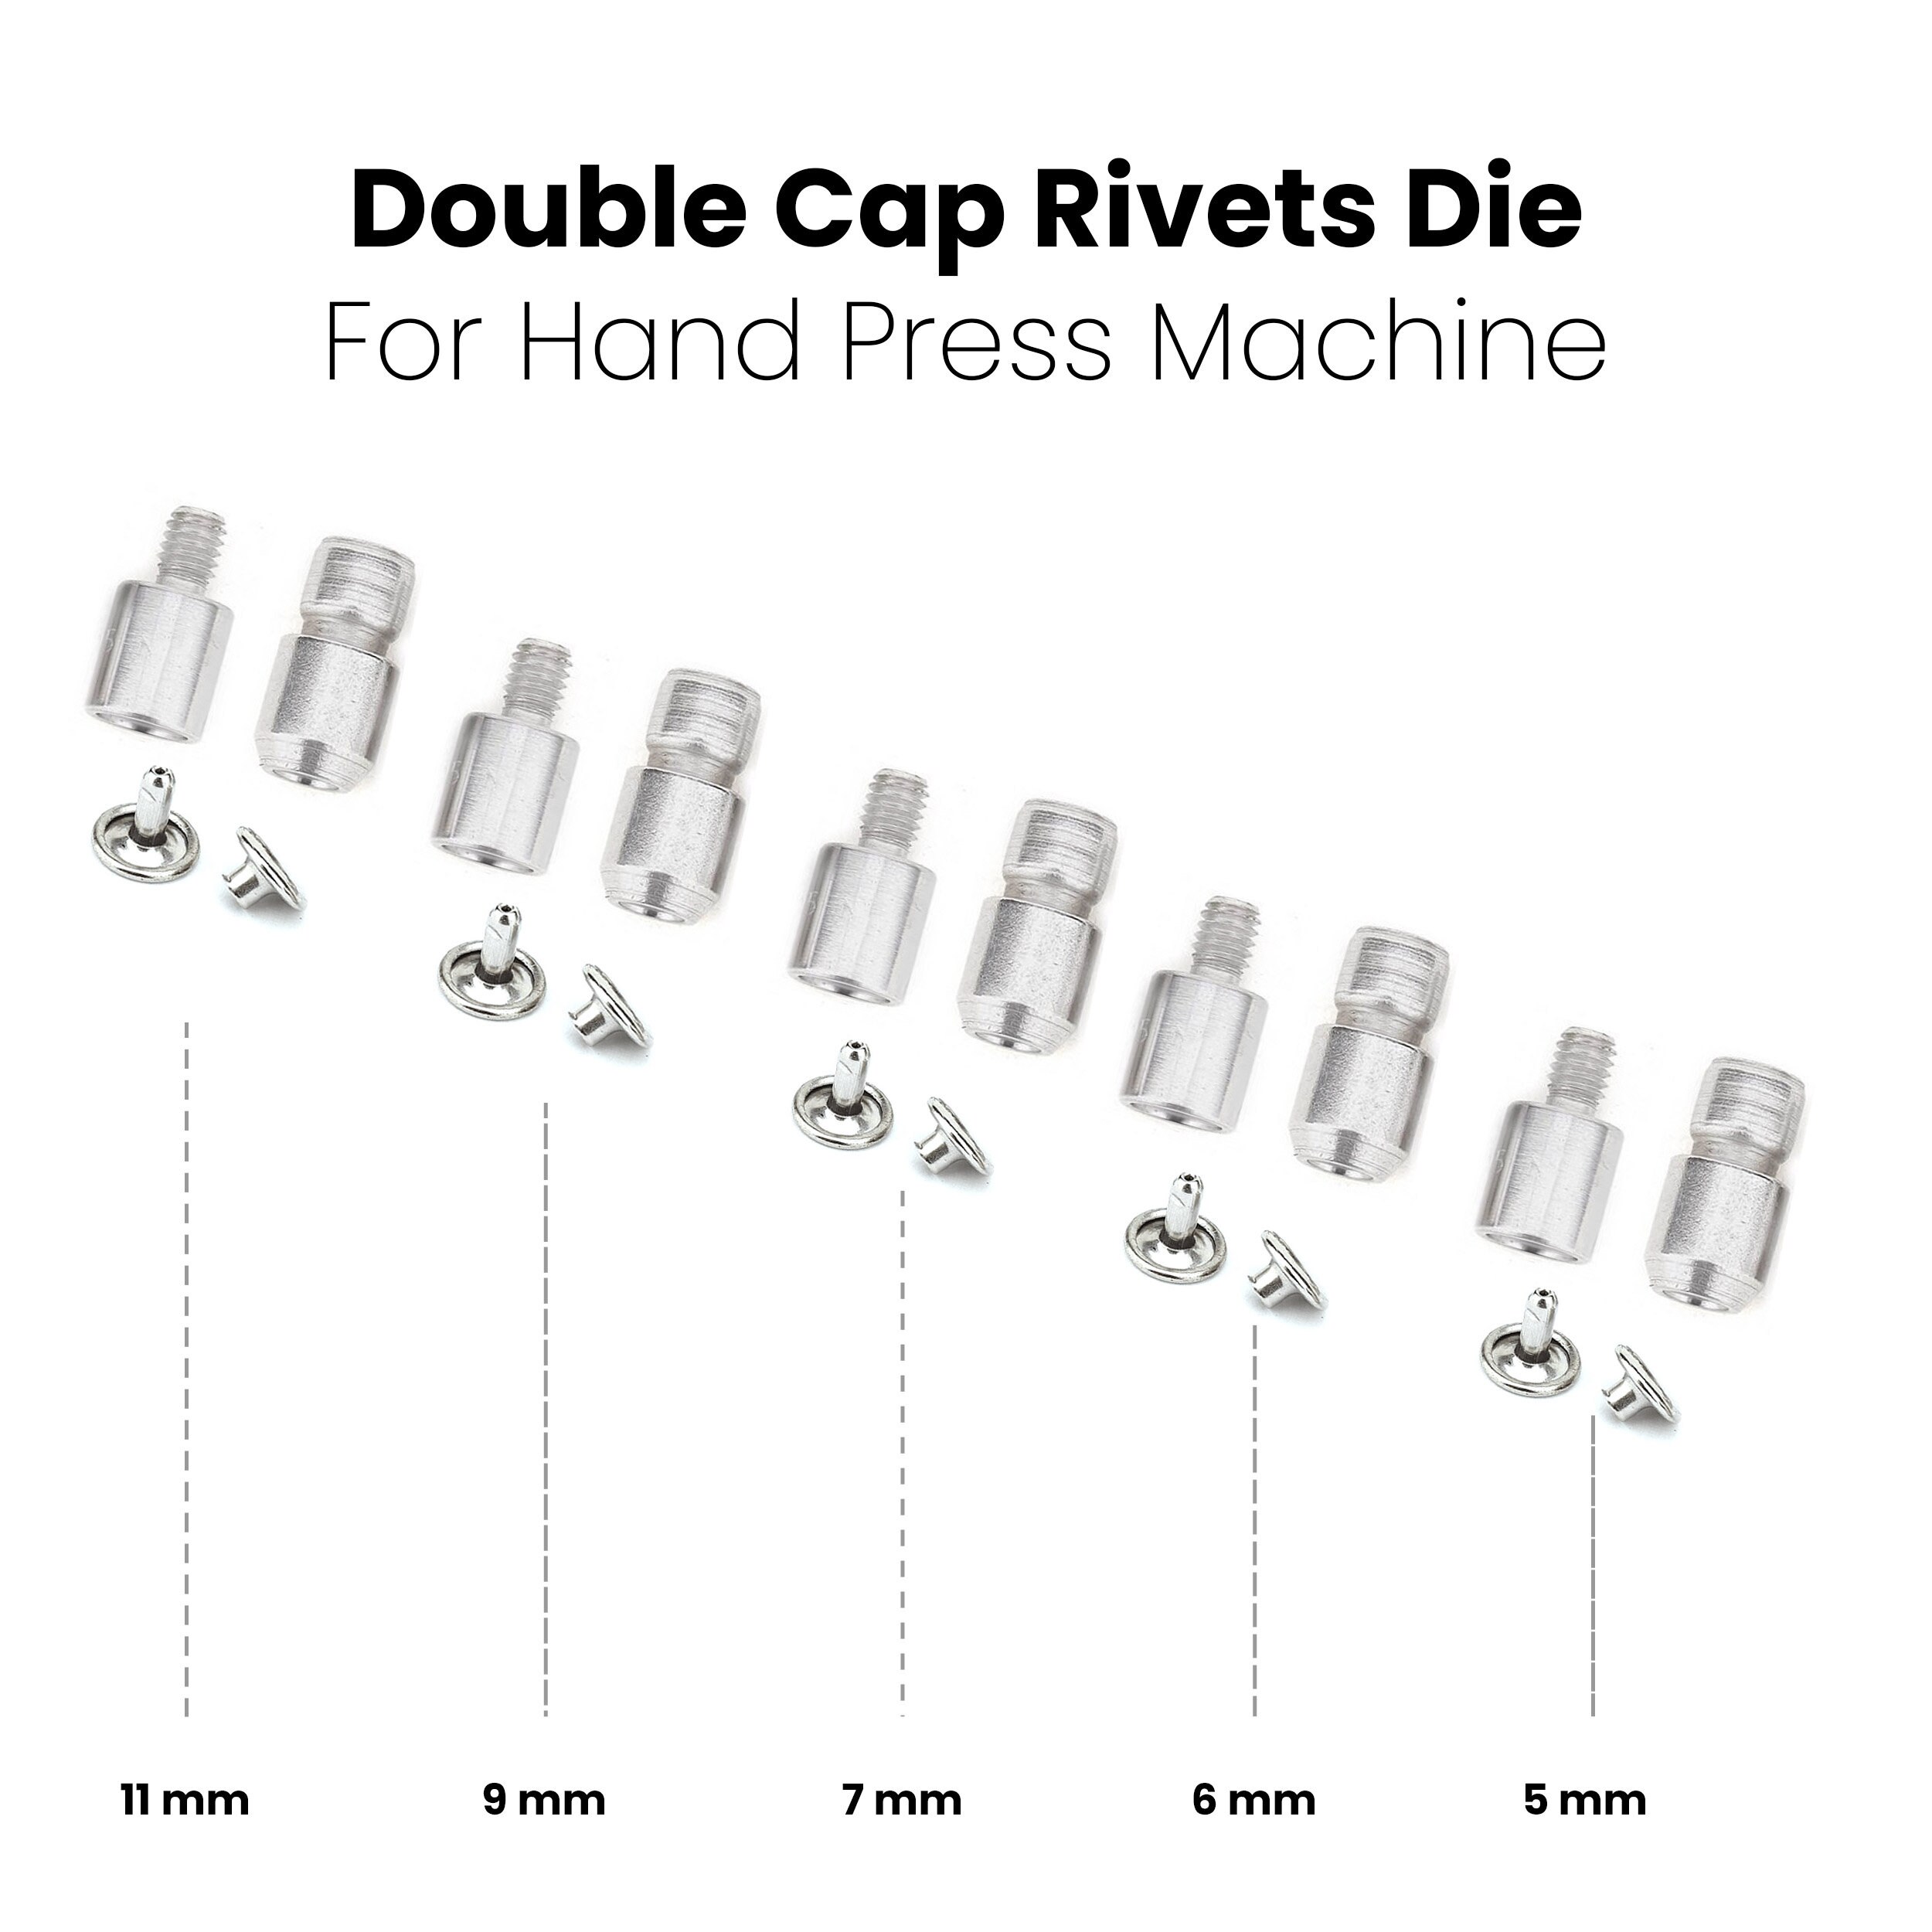 DZNTOOLS Rivet Press Machine and 5 Sets Double Cap Rivets Die - 5mm, 6mm, 7mm, 9mm, 12mm Double Cap Rivets Hand Press Machine Setter Setting Tool and Hole